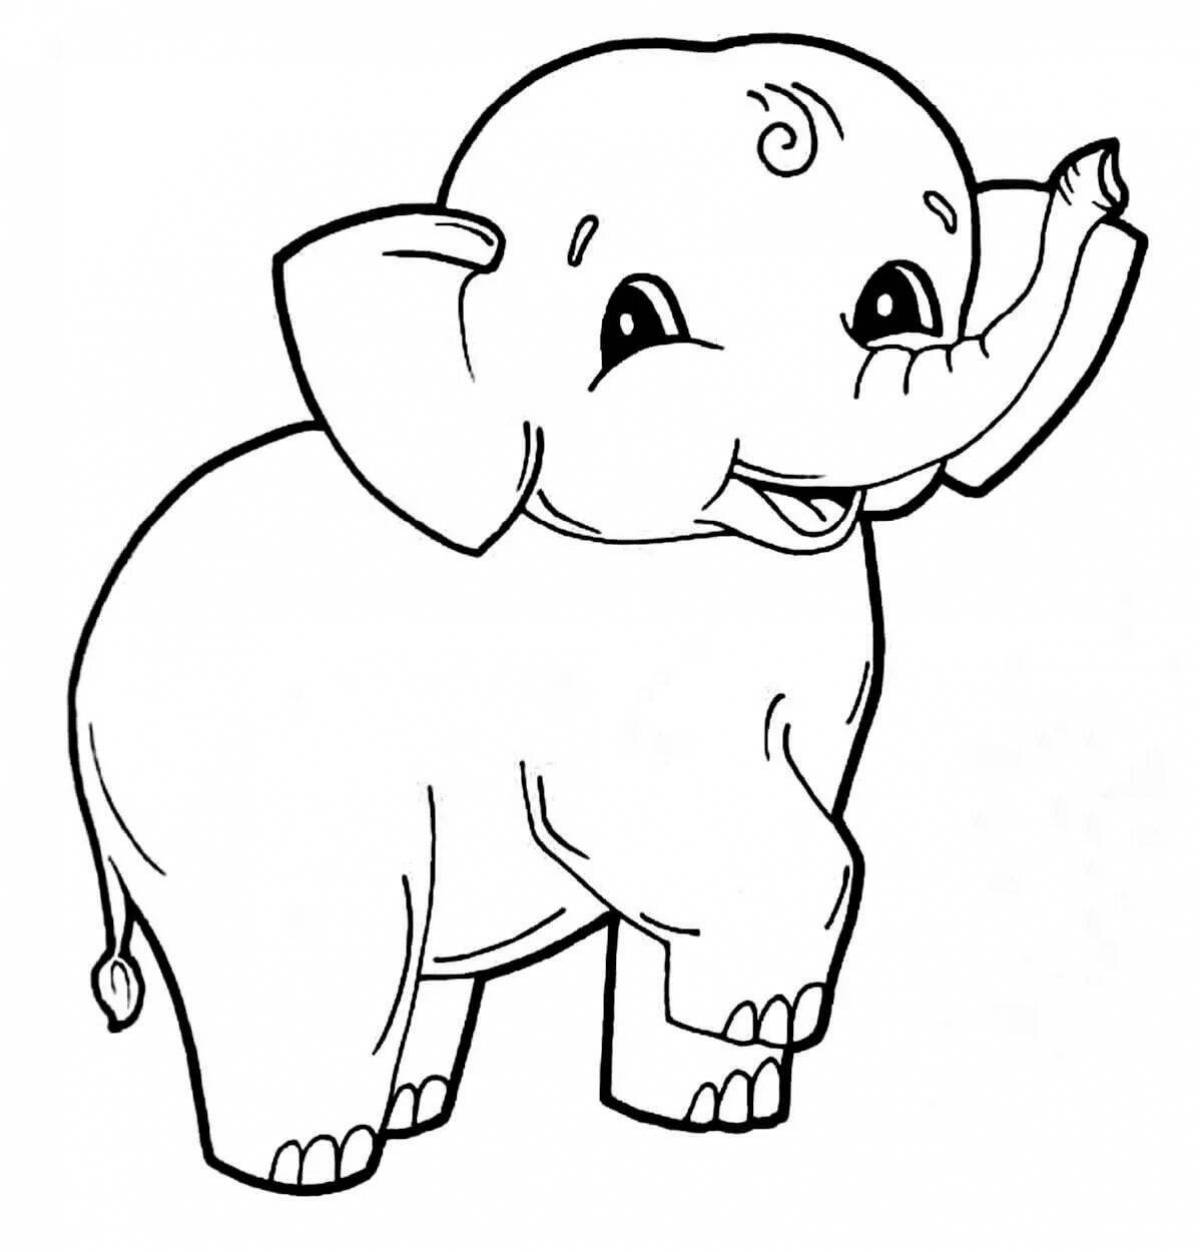 Elephant bubble coloring